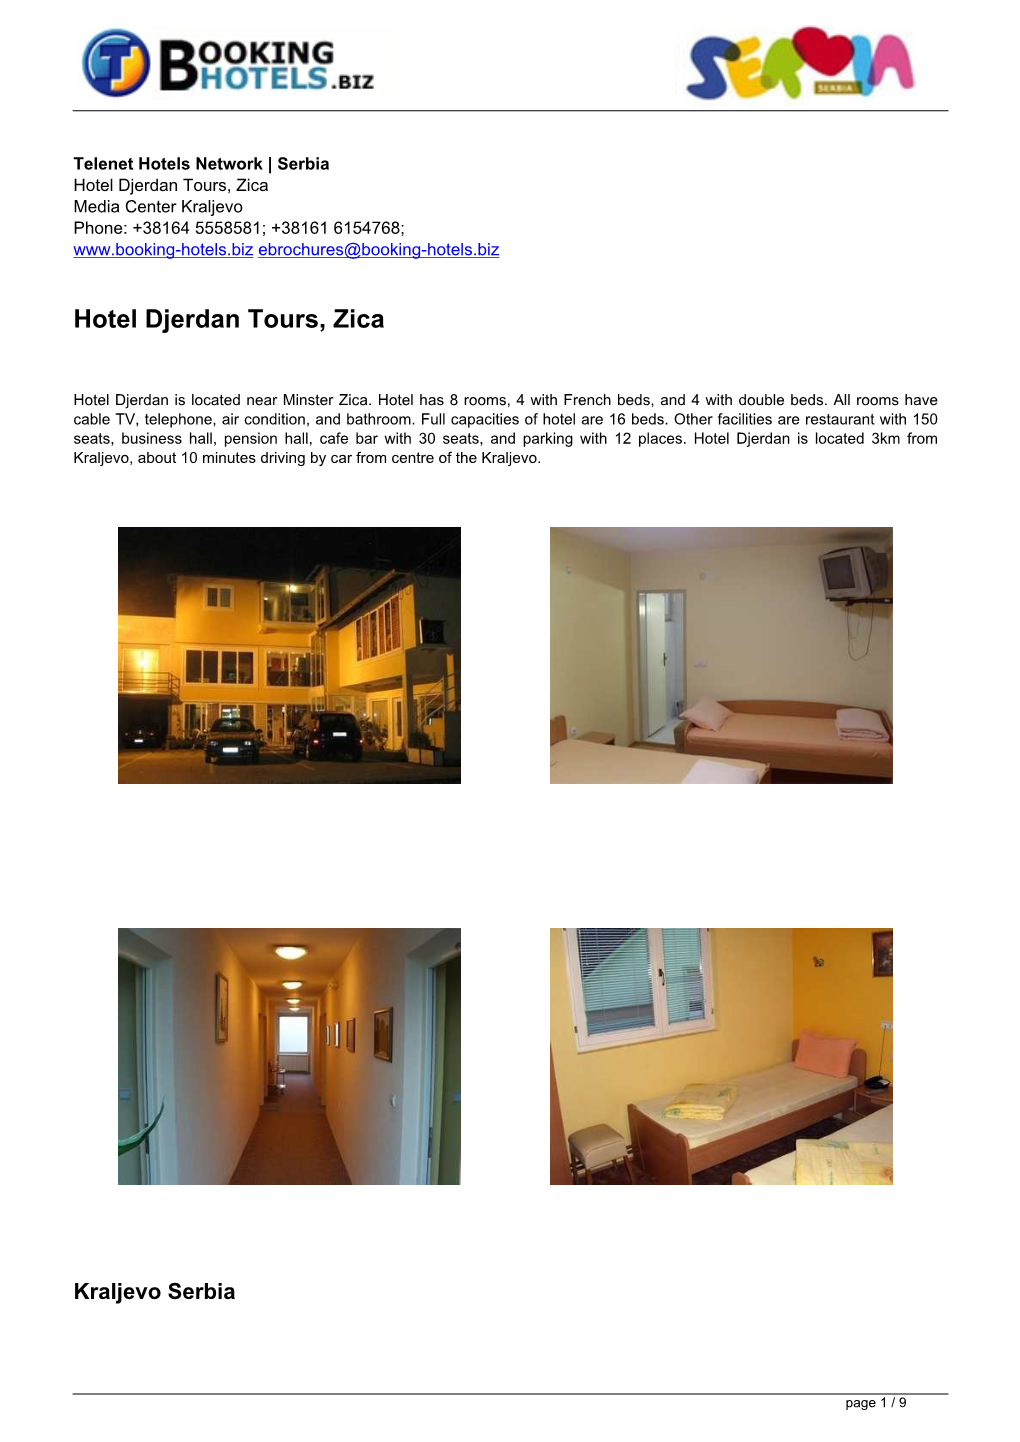 Hotel Djerdan Tours, Zica Media Center Kraljevo Phone: +38164 5558581; +38161 6154768; Ebrochures@Booking-Hotels.Biz